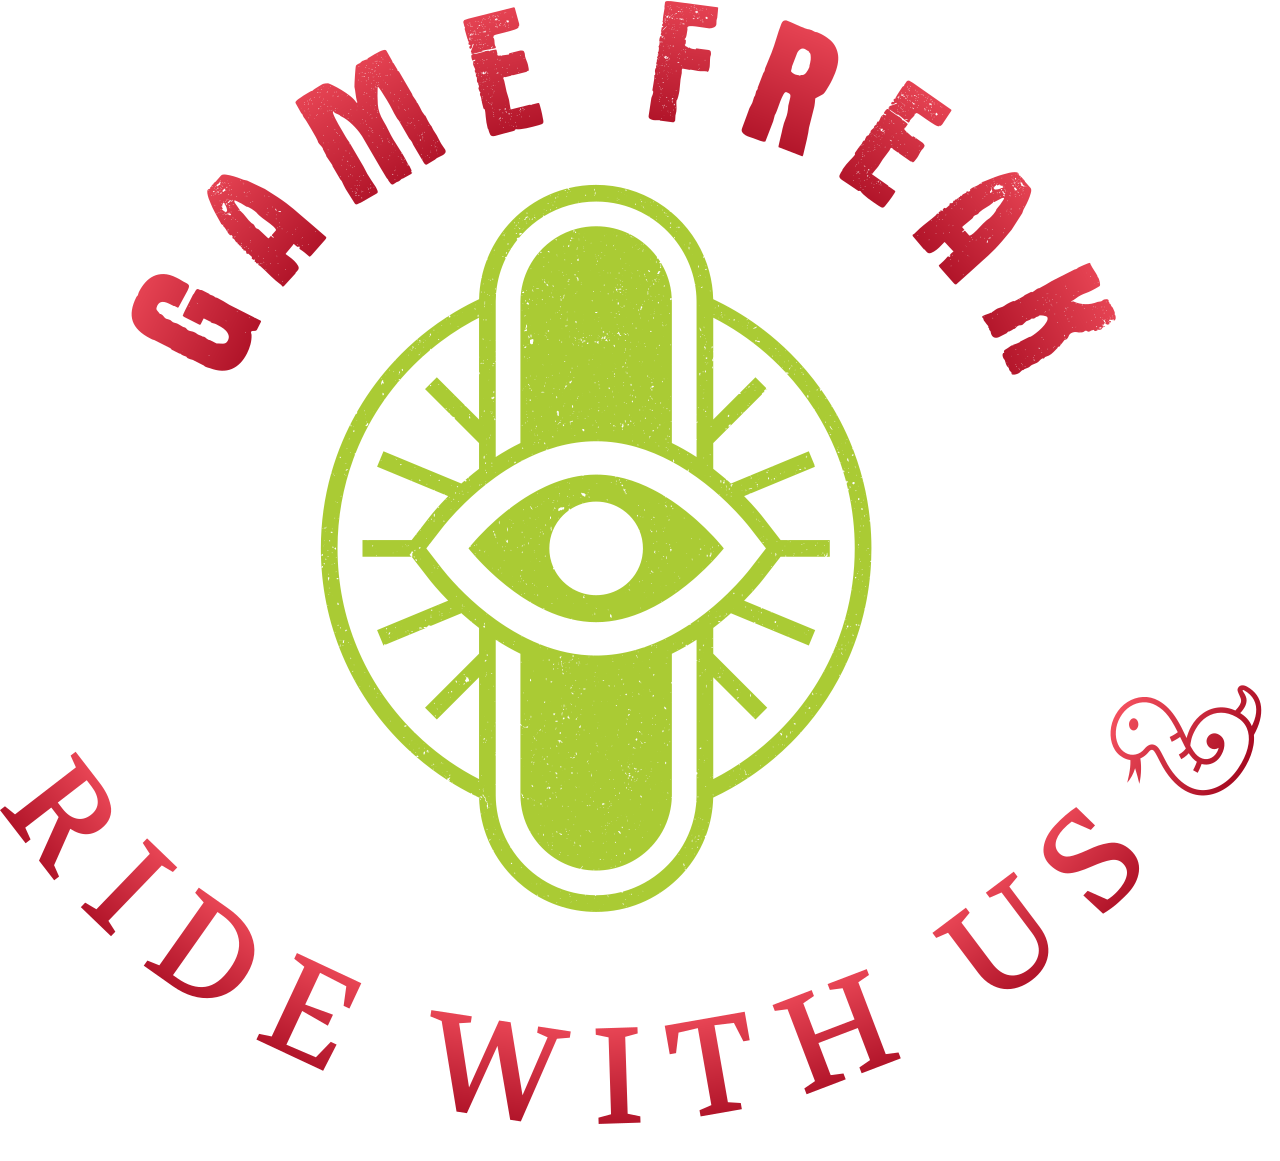 GAME FREAK's logo